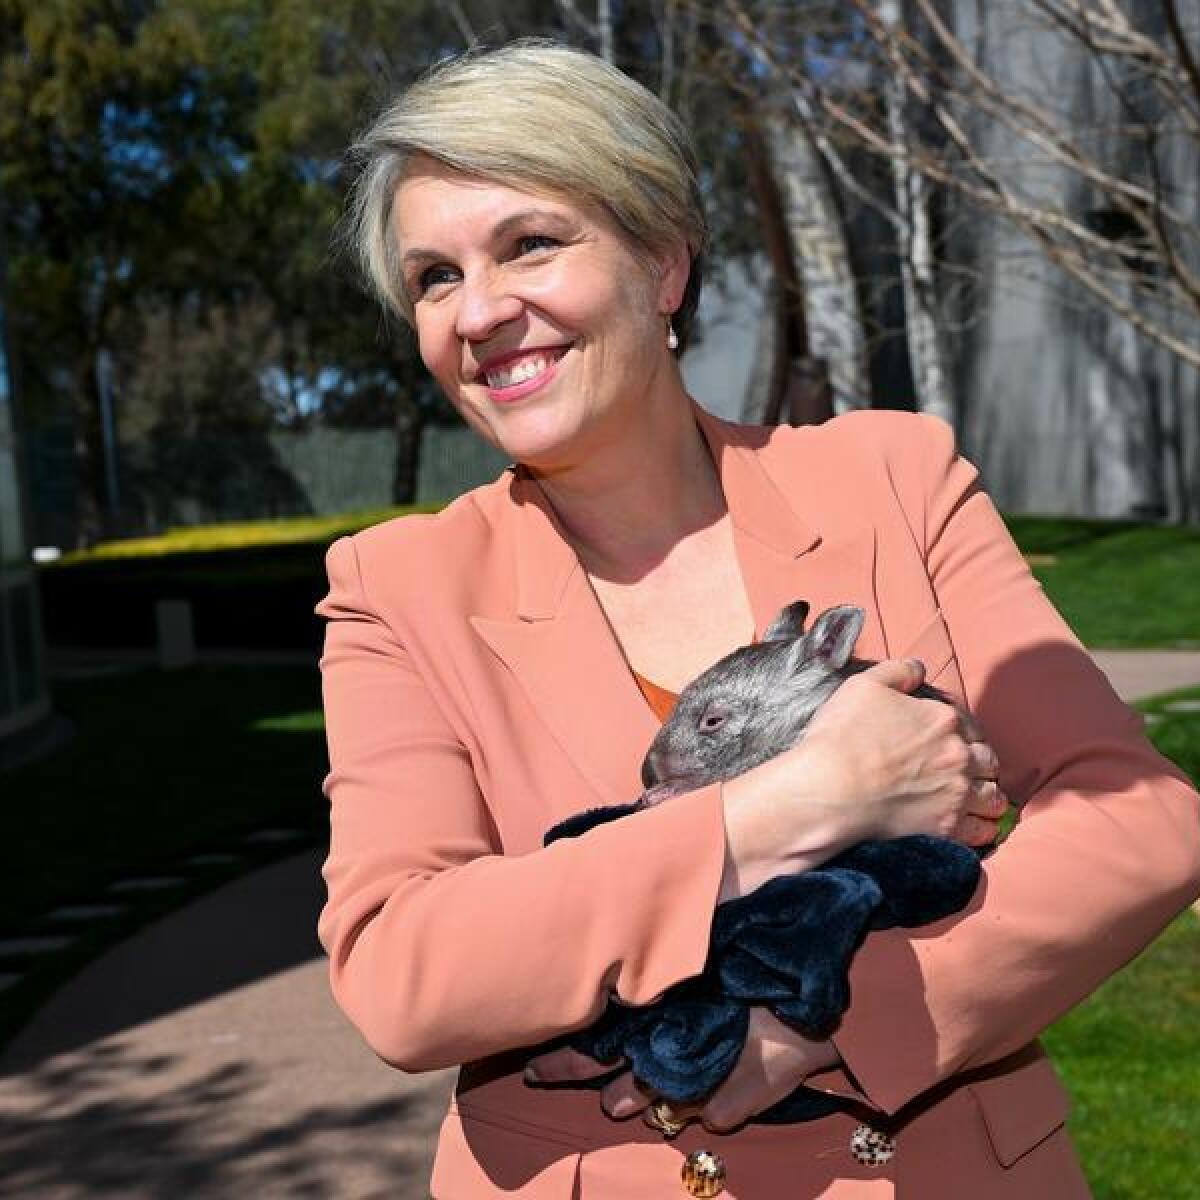 Tanya Plibersek with a wombat